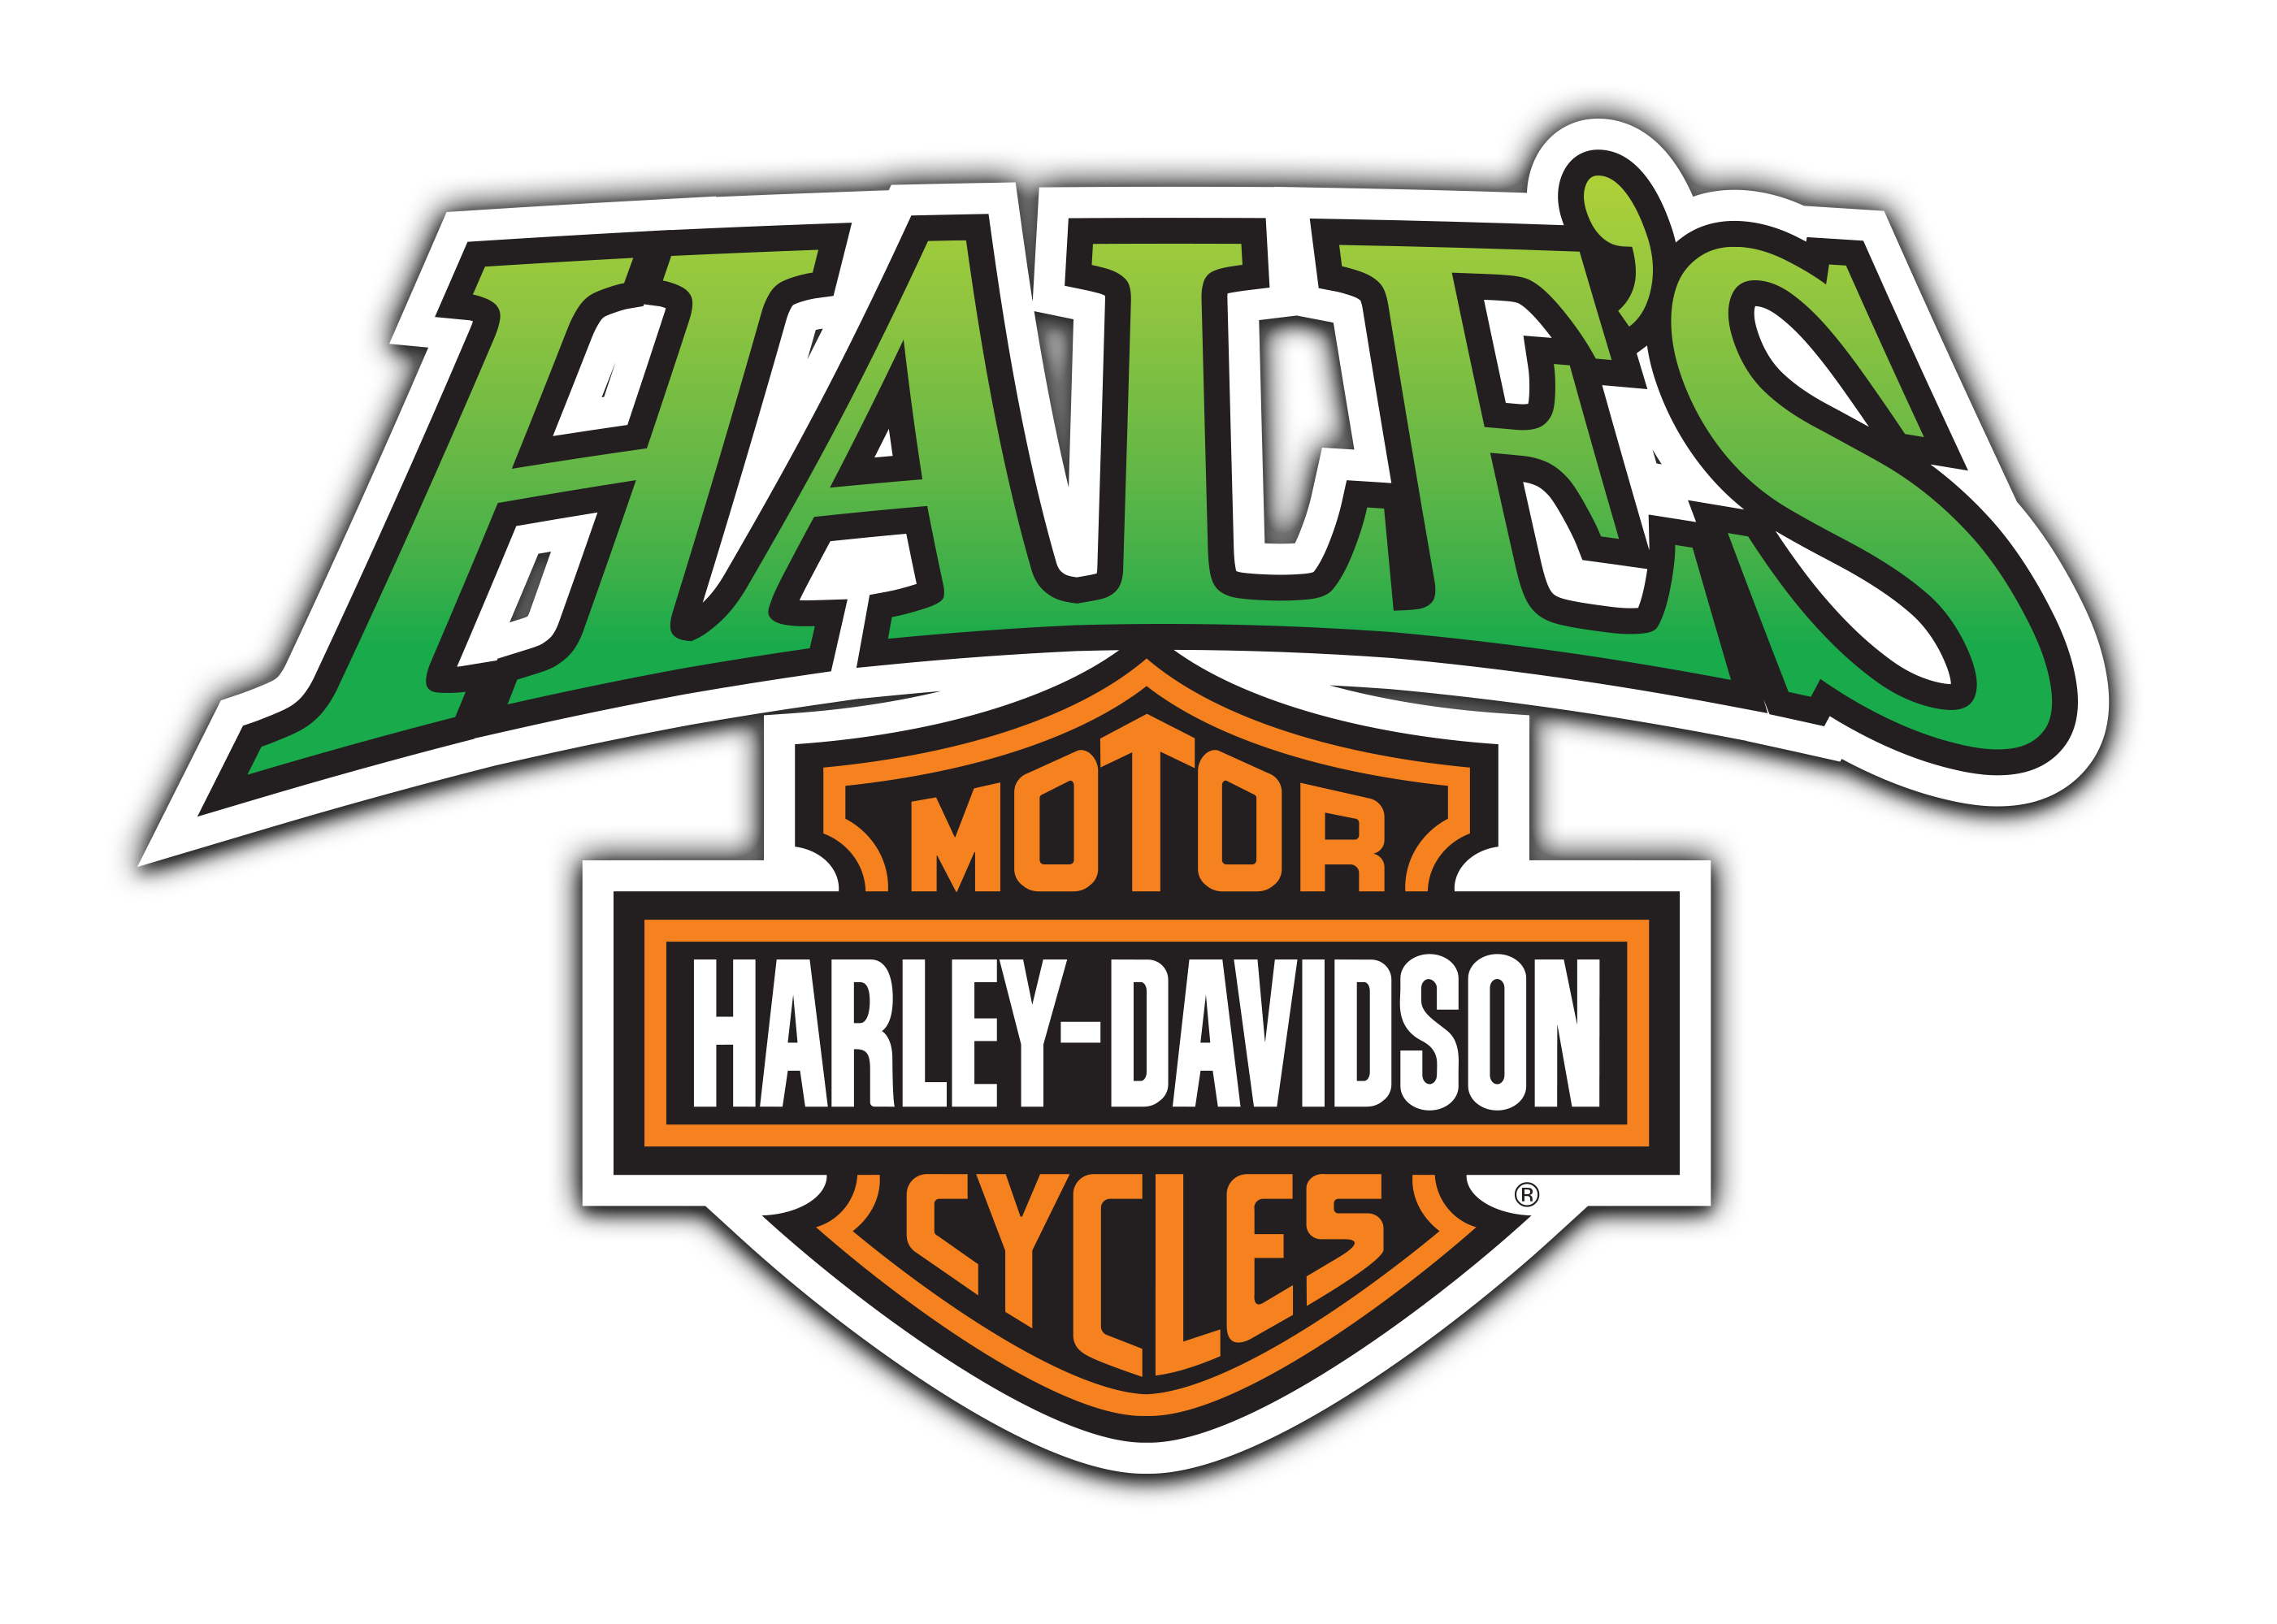 Hale's Harley-Davidson